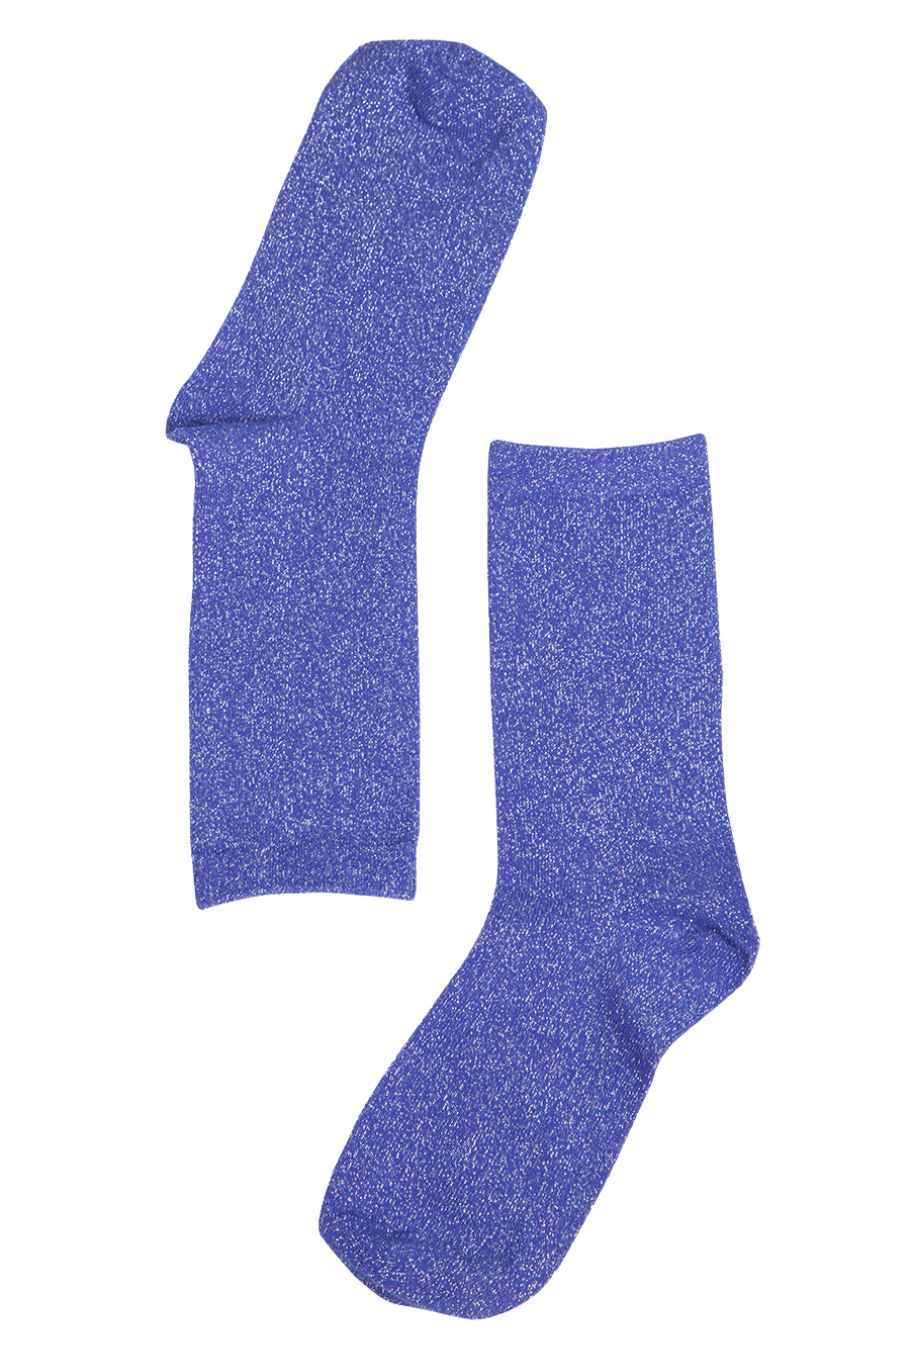 Womens Glitter Socks Blue Sparkly Ankle Socks Silver Shimmer - Allison's Boutique